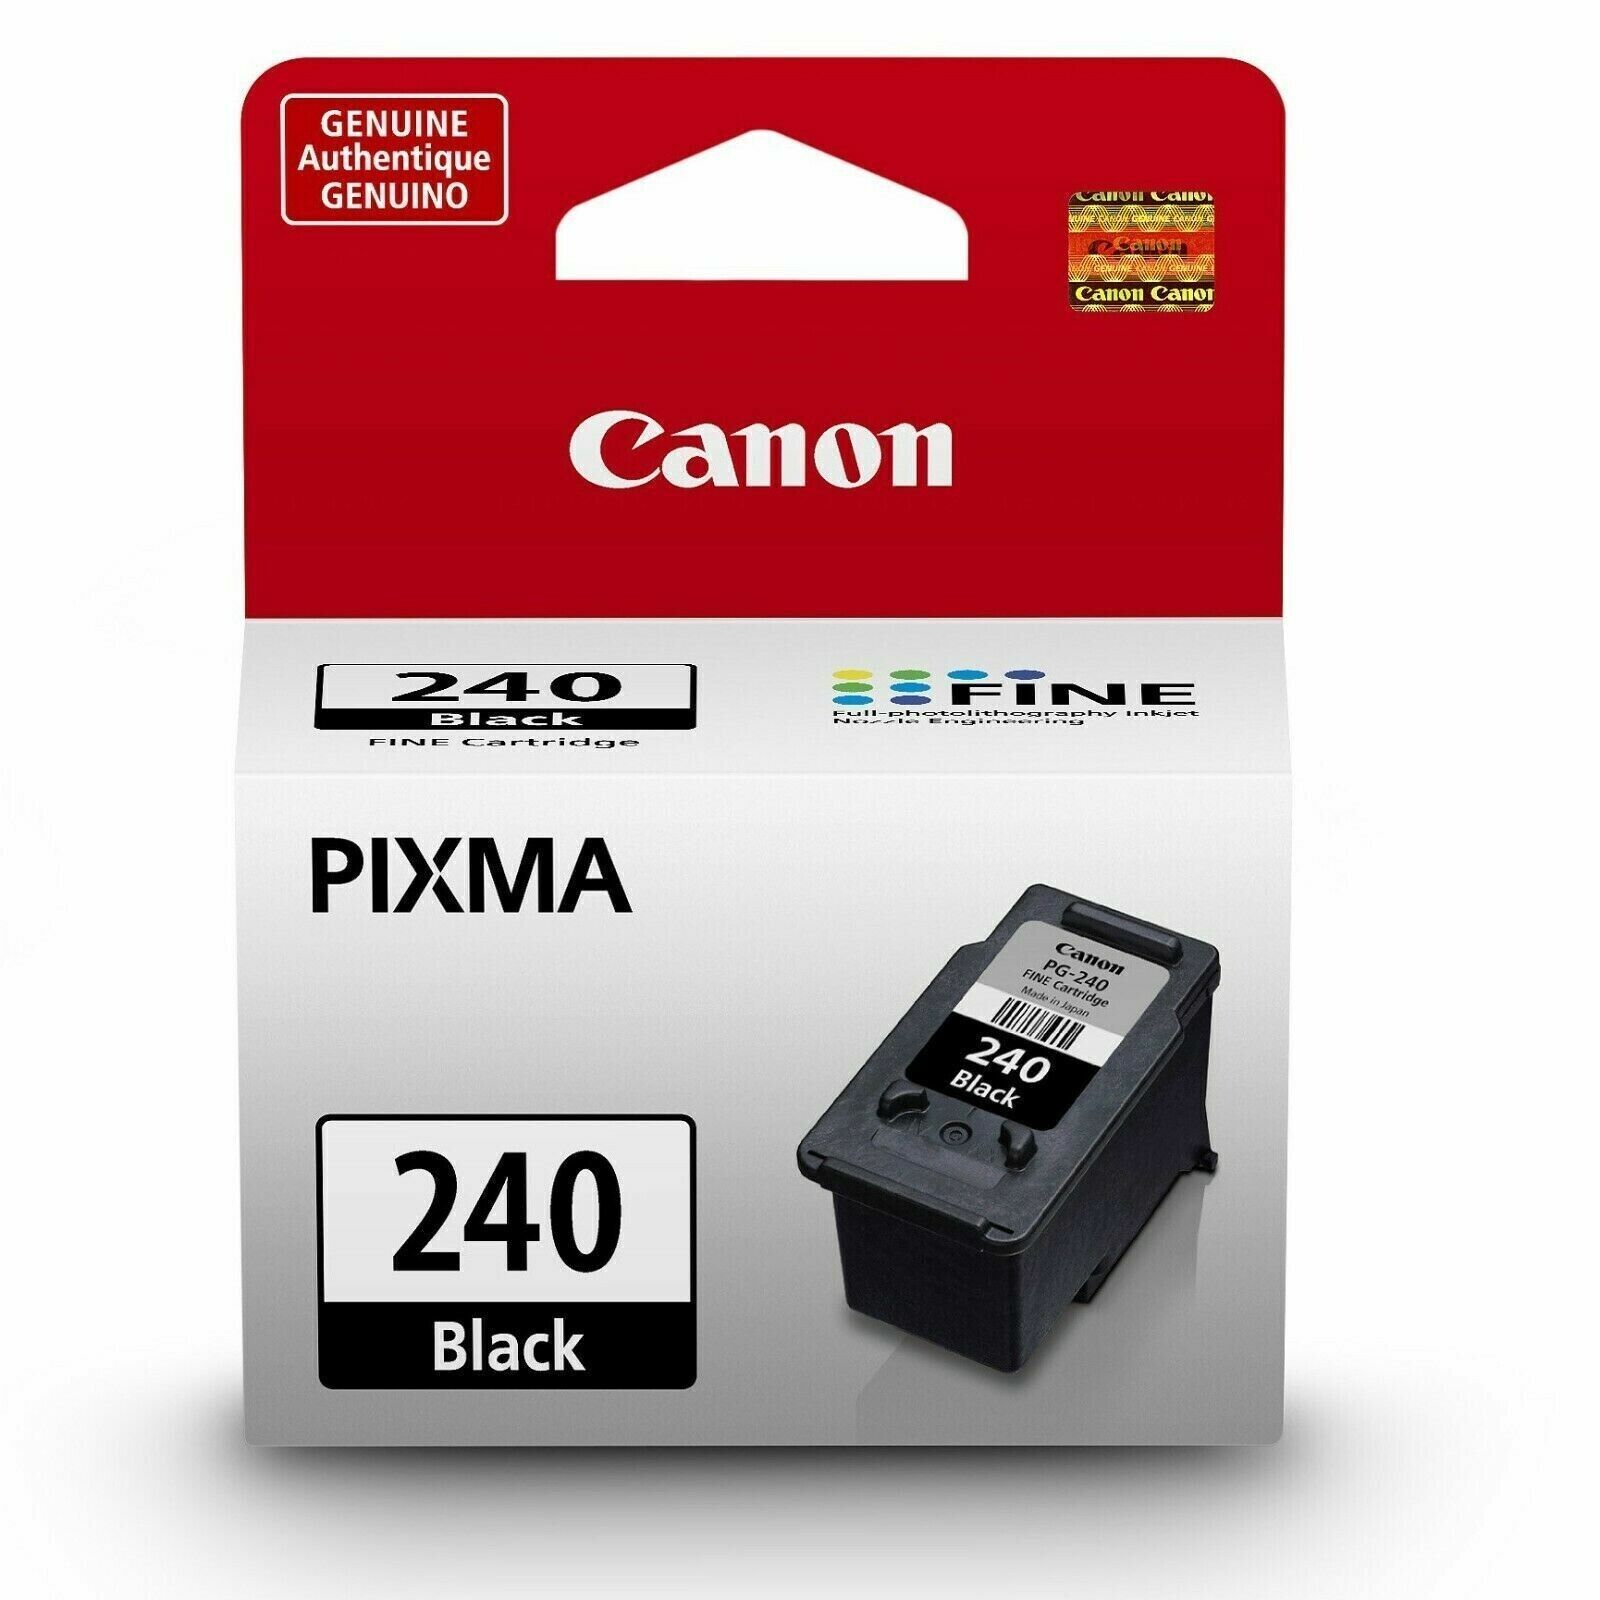 Canon PG-240 Black Ink Cartridge 5207B001 PG240 Genuine Original - NEW/SEALED